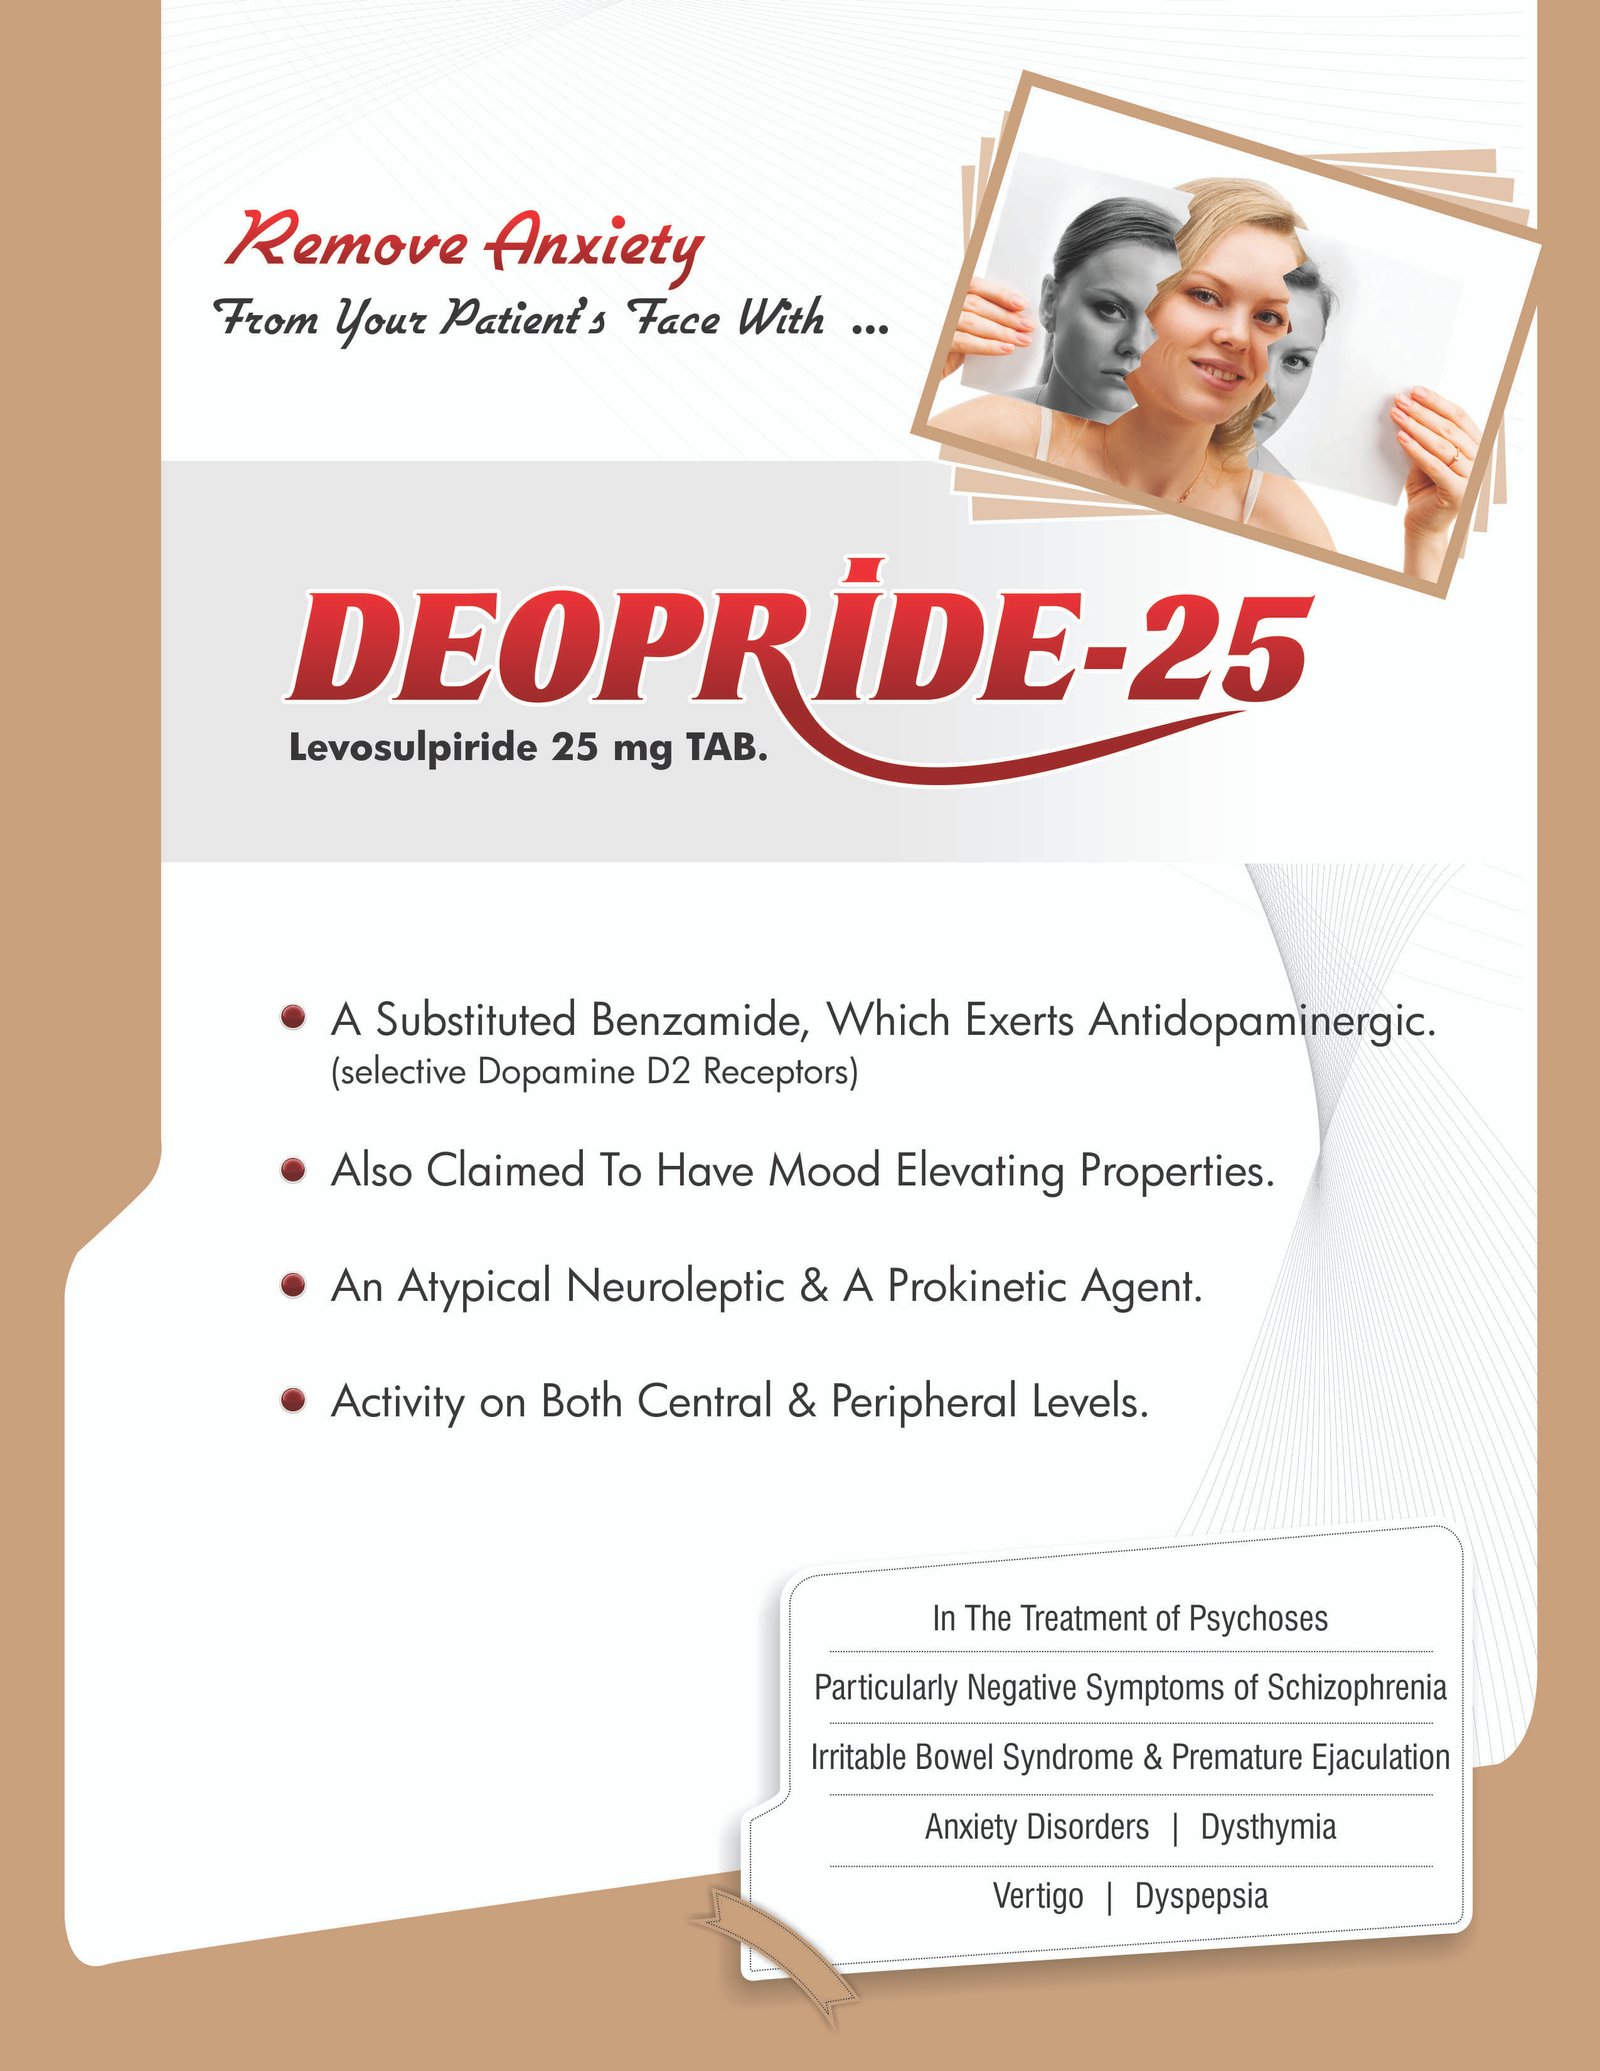 DEOPRIDE, deopride-25, daksh pharmaceuticals, daksh pharmaceuticals panchkula, pcd franchise